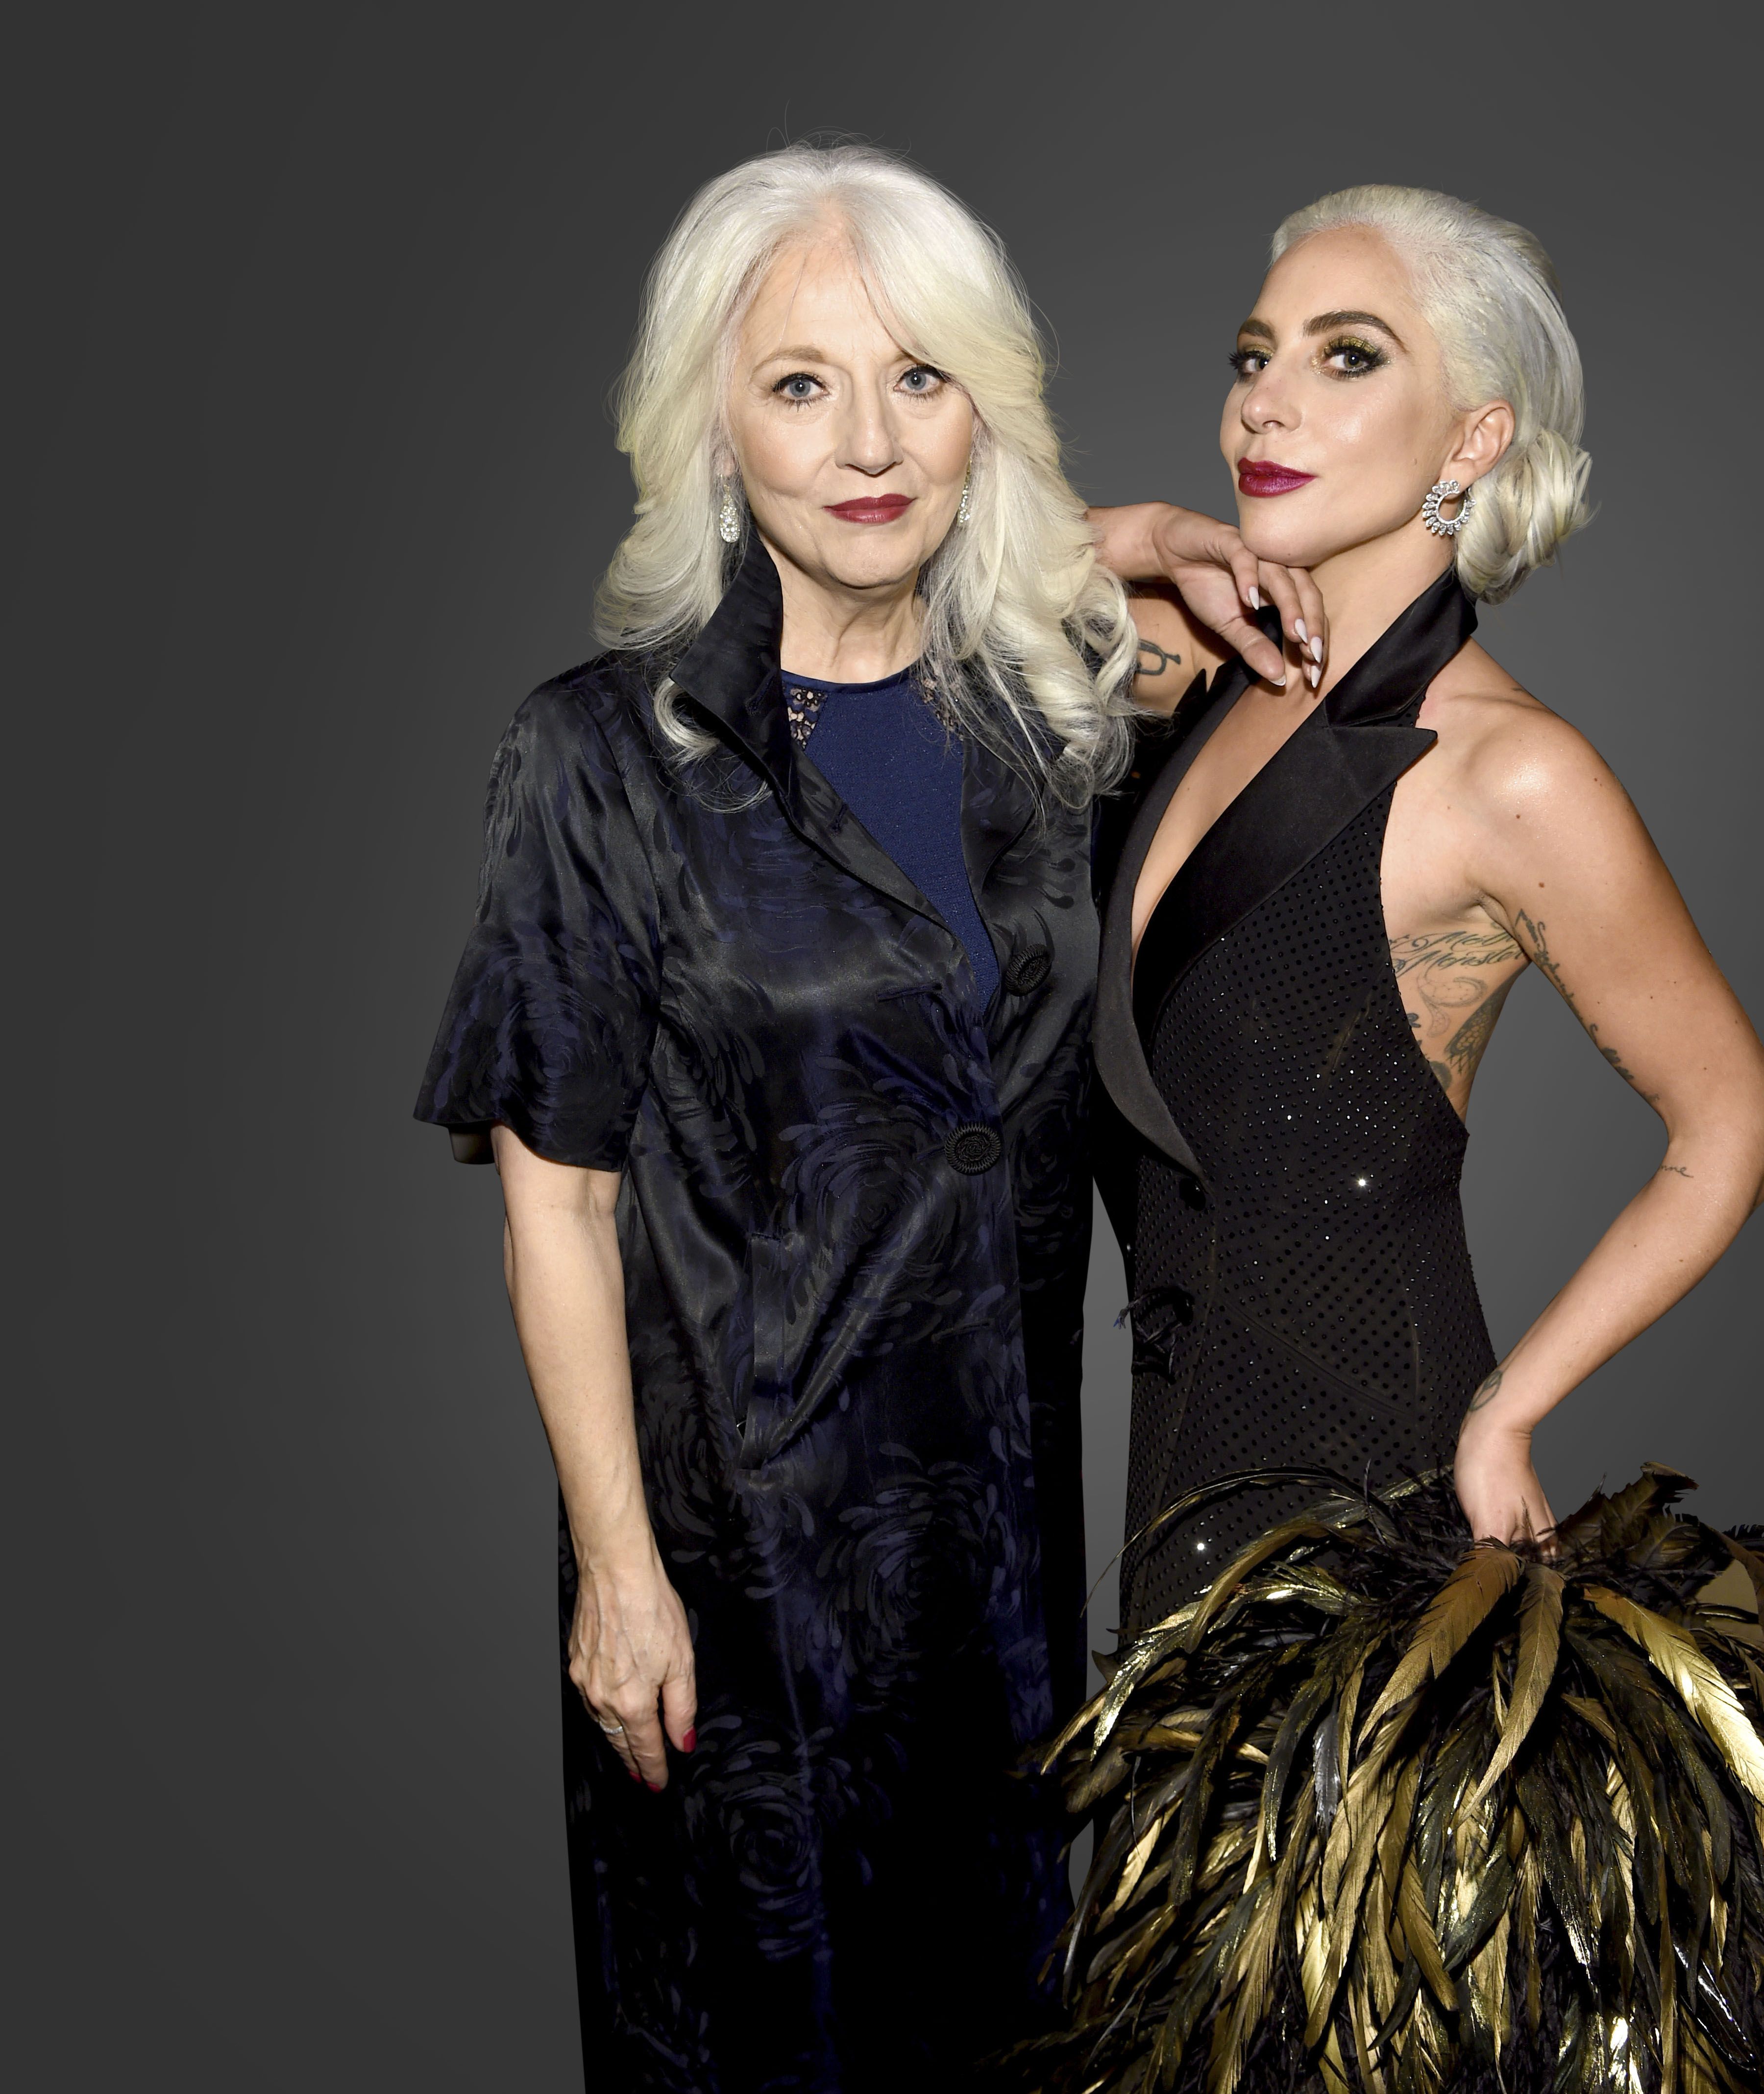 Lady Gaga Talks to Oprah About Trauma, Self-Harm, and Choosing Kindness